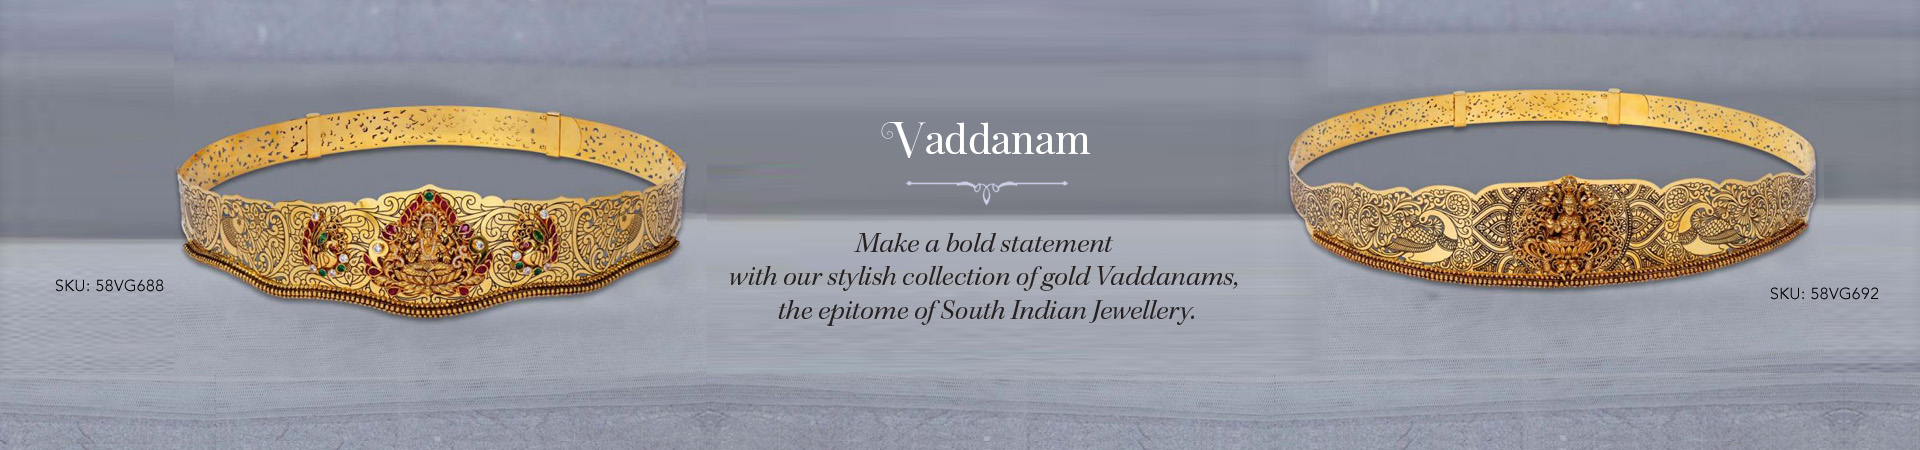 Gold Vaddanam